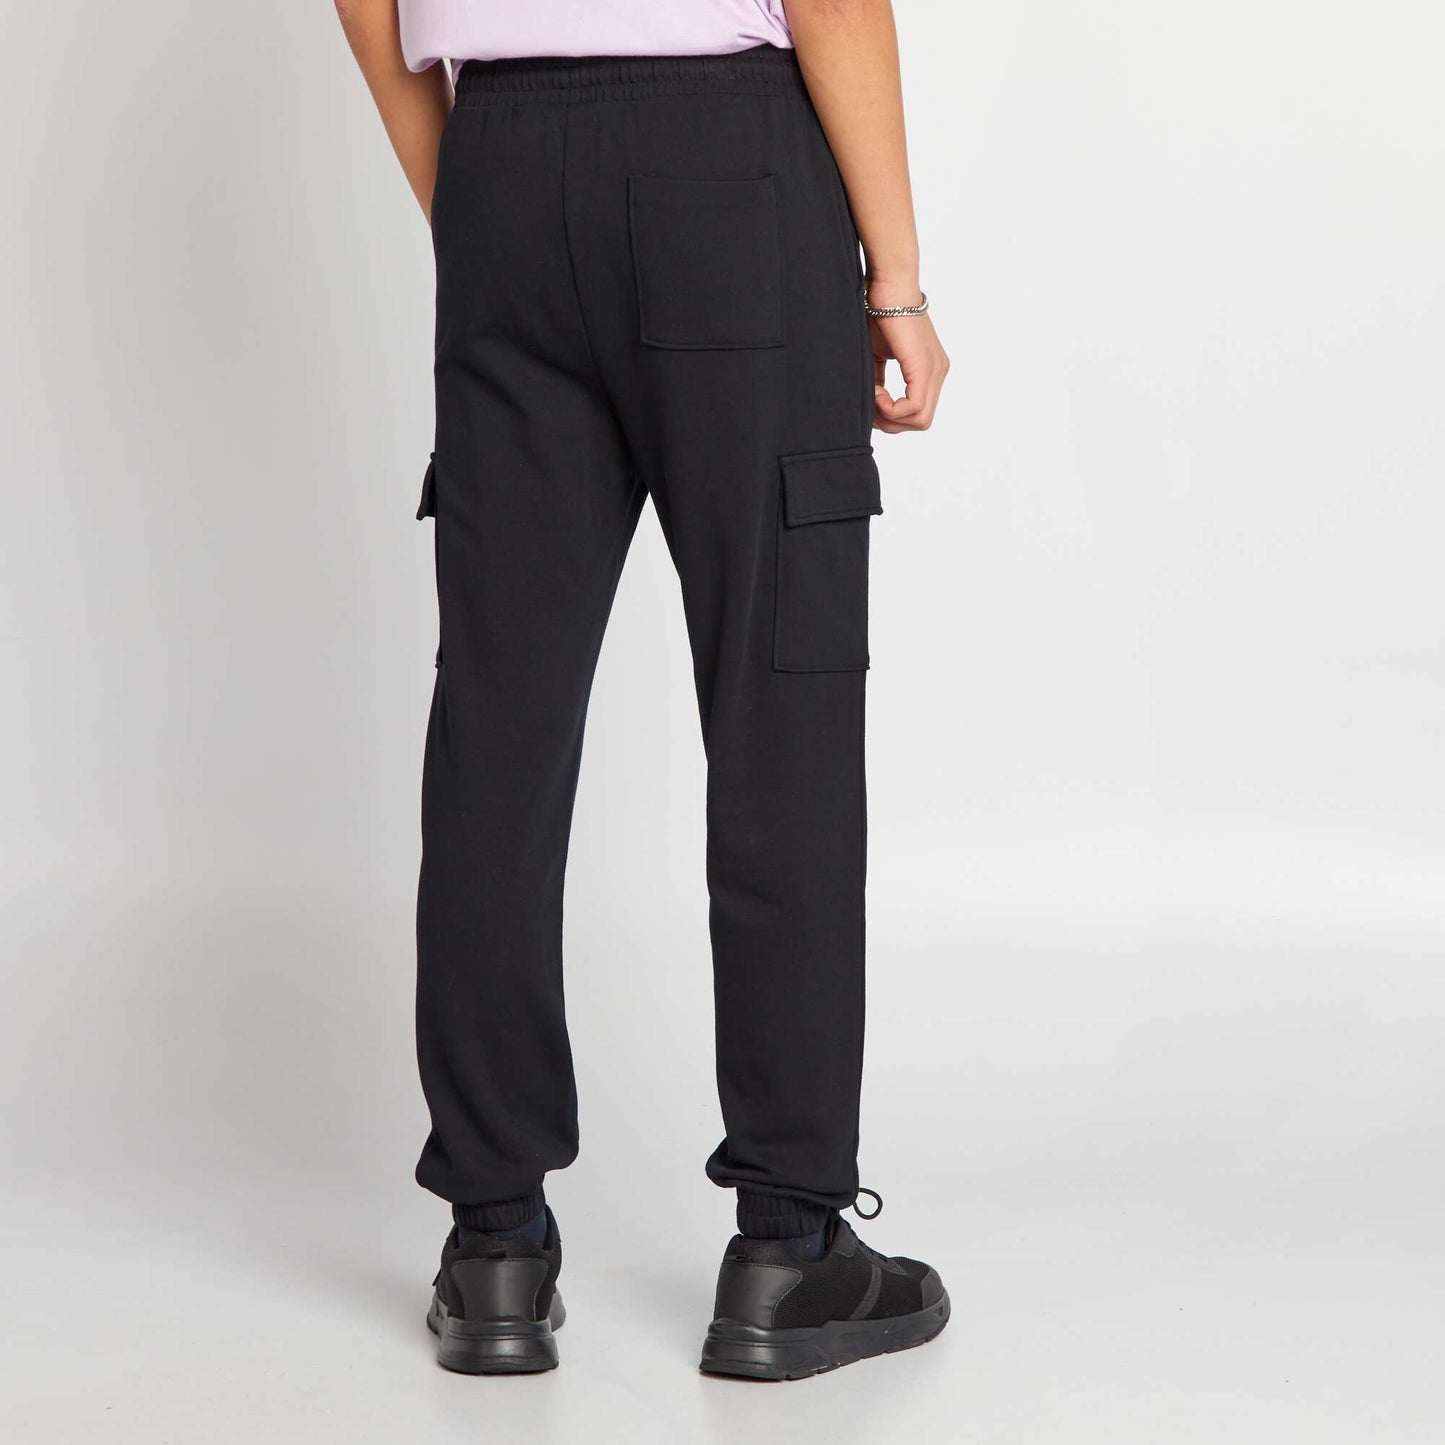 Pantalon de jogging style cargo noir